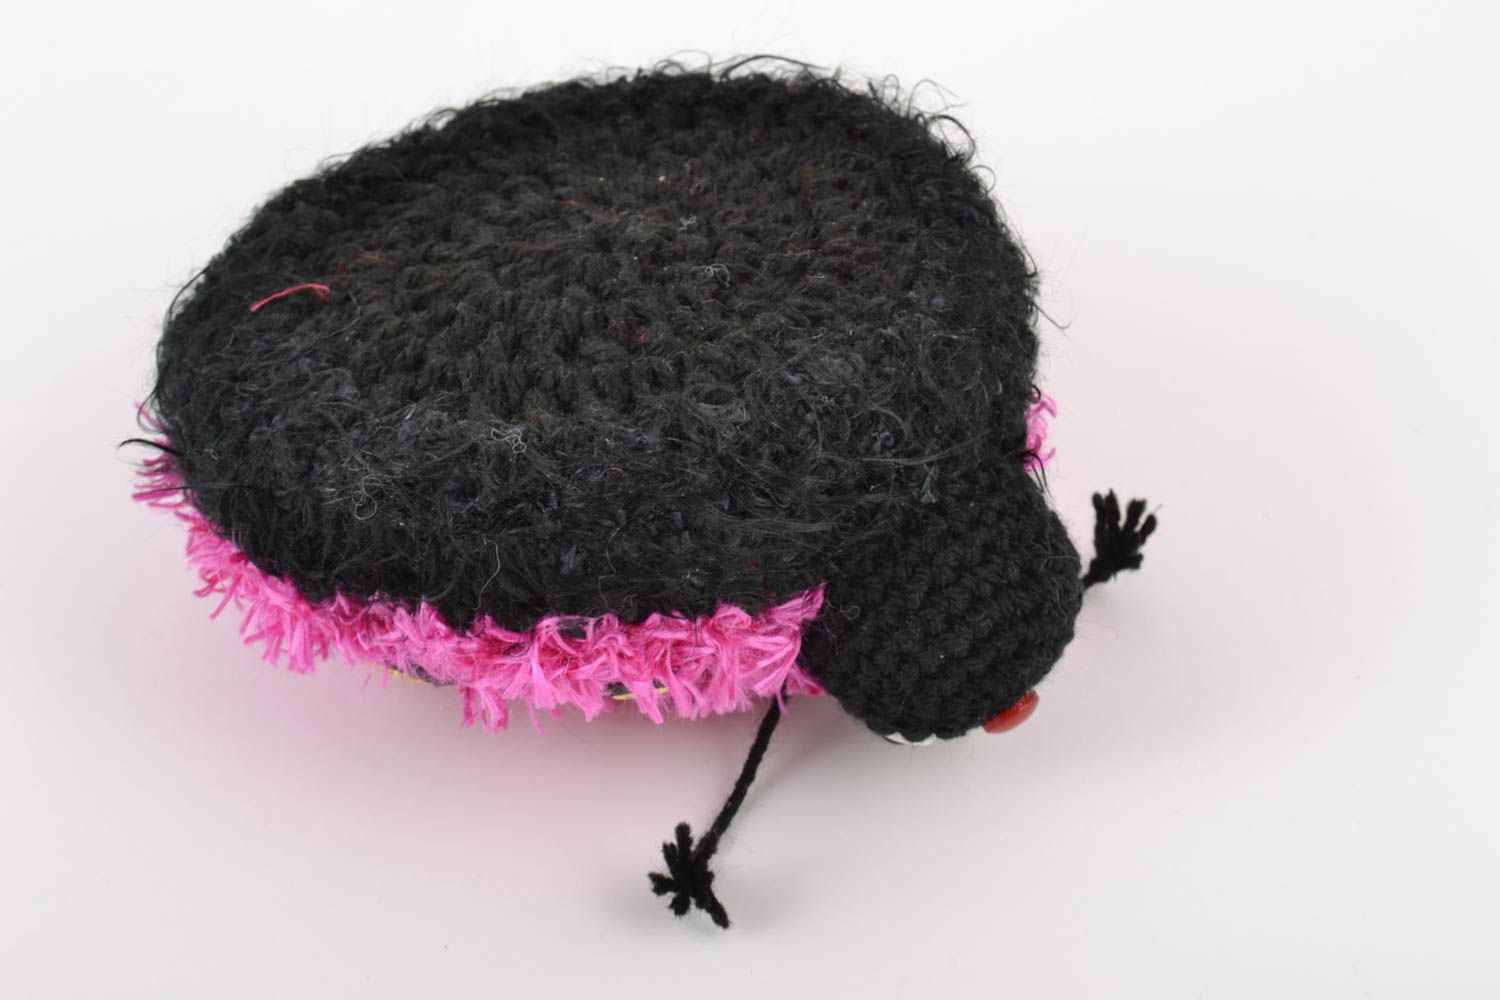 Handmade pink crochet soft toy created using amigurumi technique in the shape of ladybug photo 5